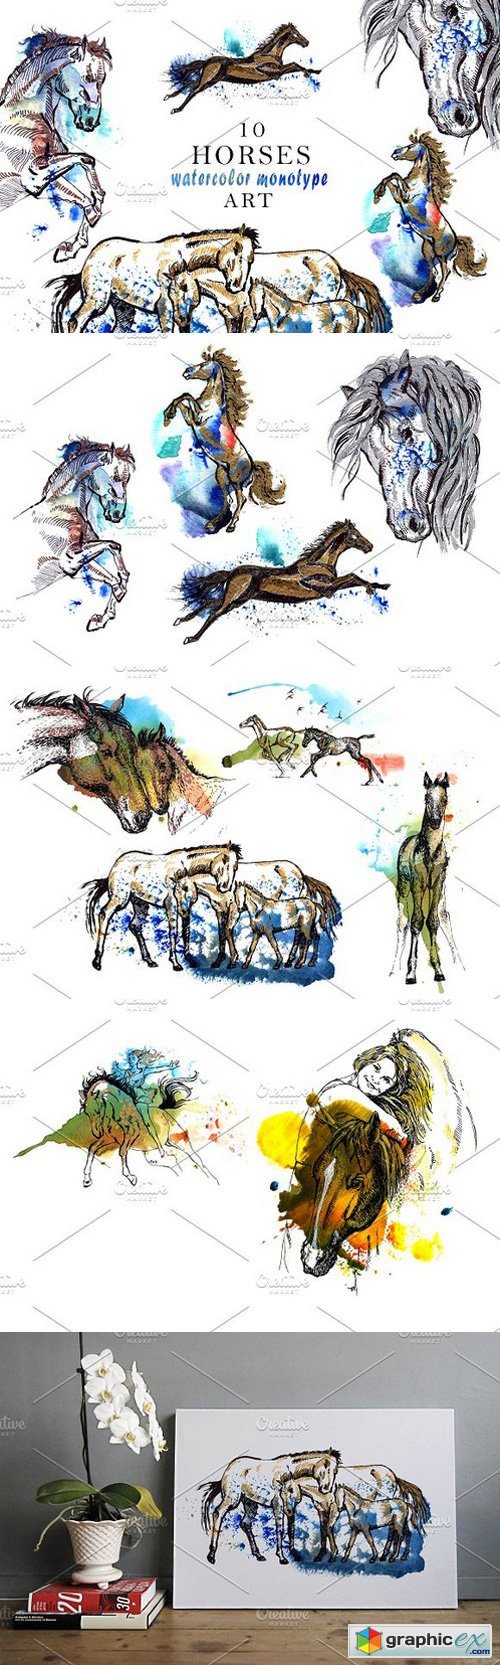 Horse Watercolor Monotype Art